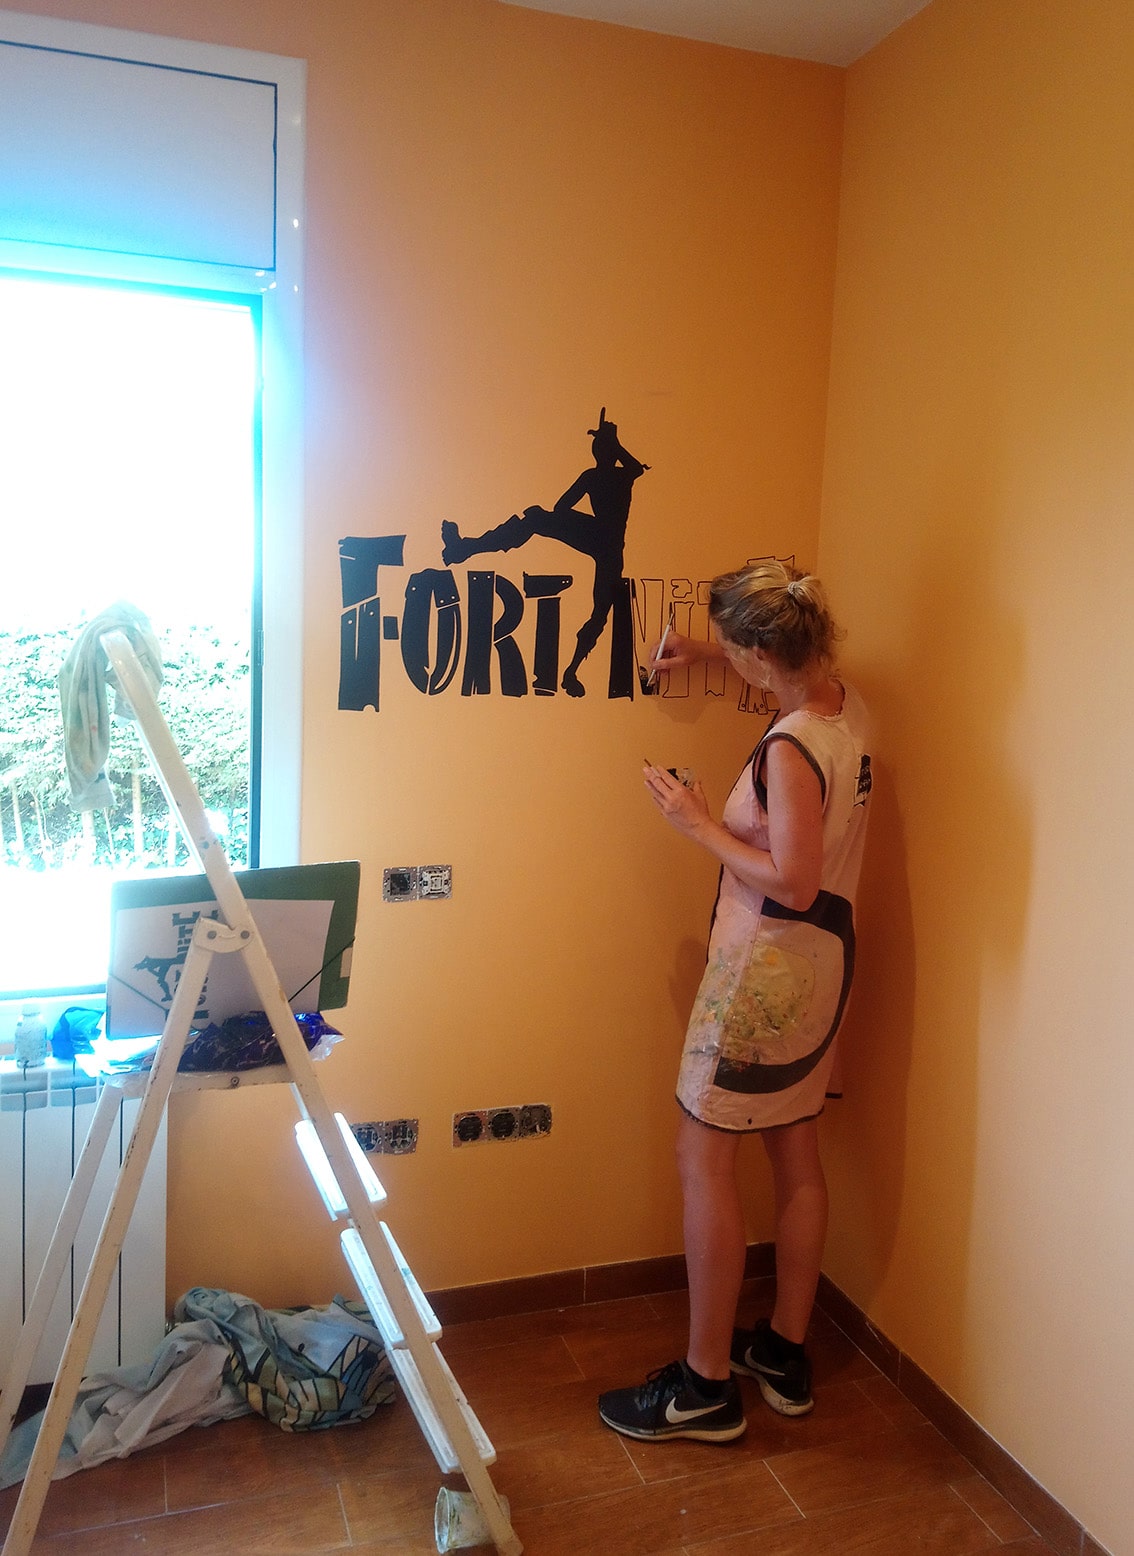 Pintura Mural en Habitación Infantil de Fortnite